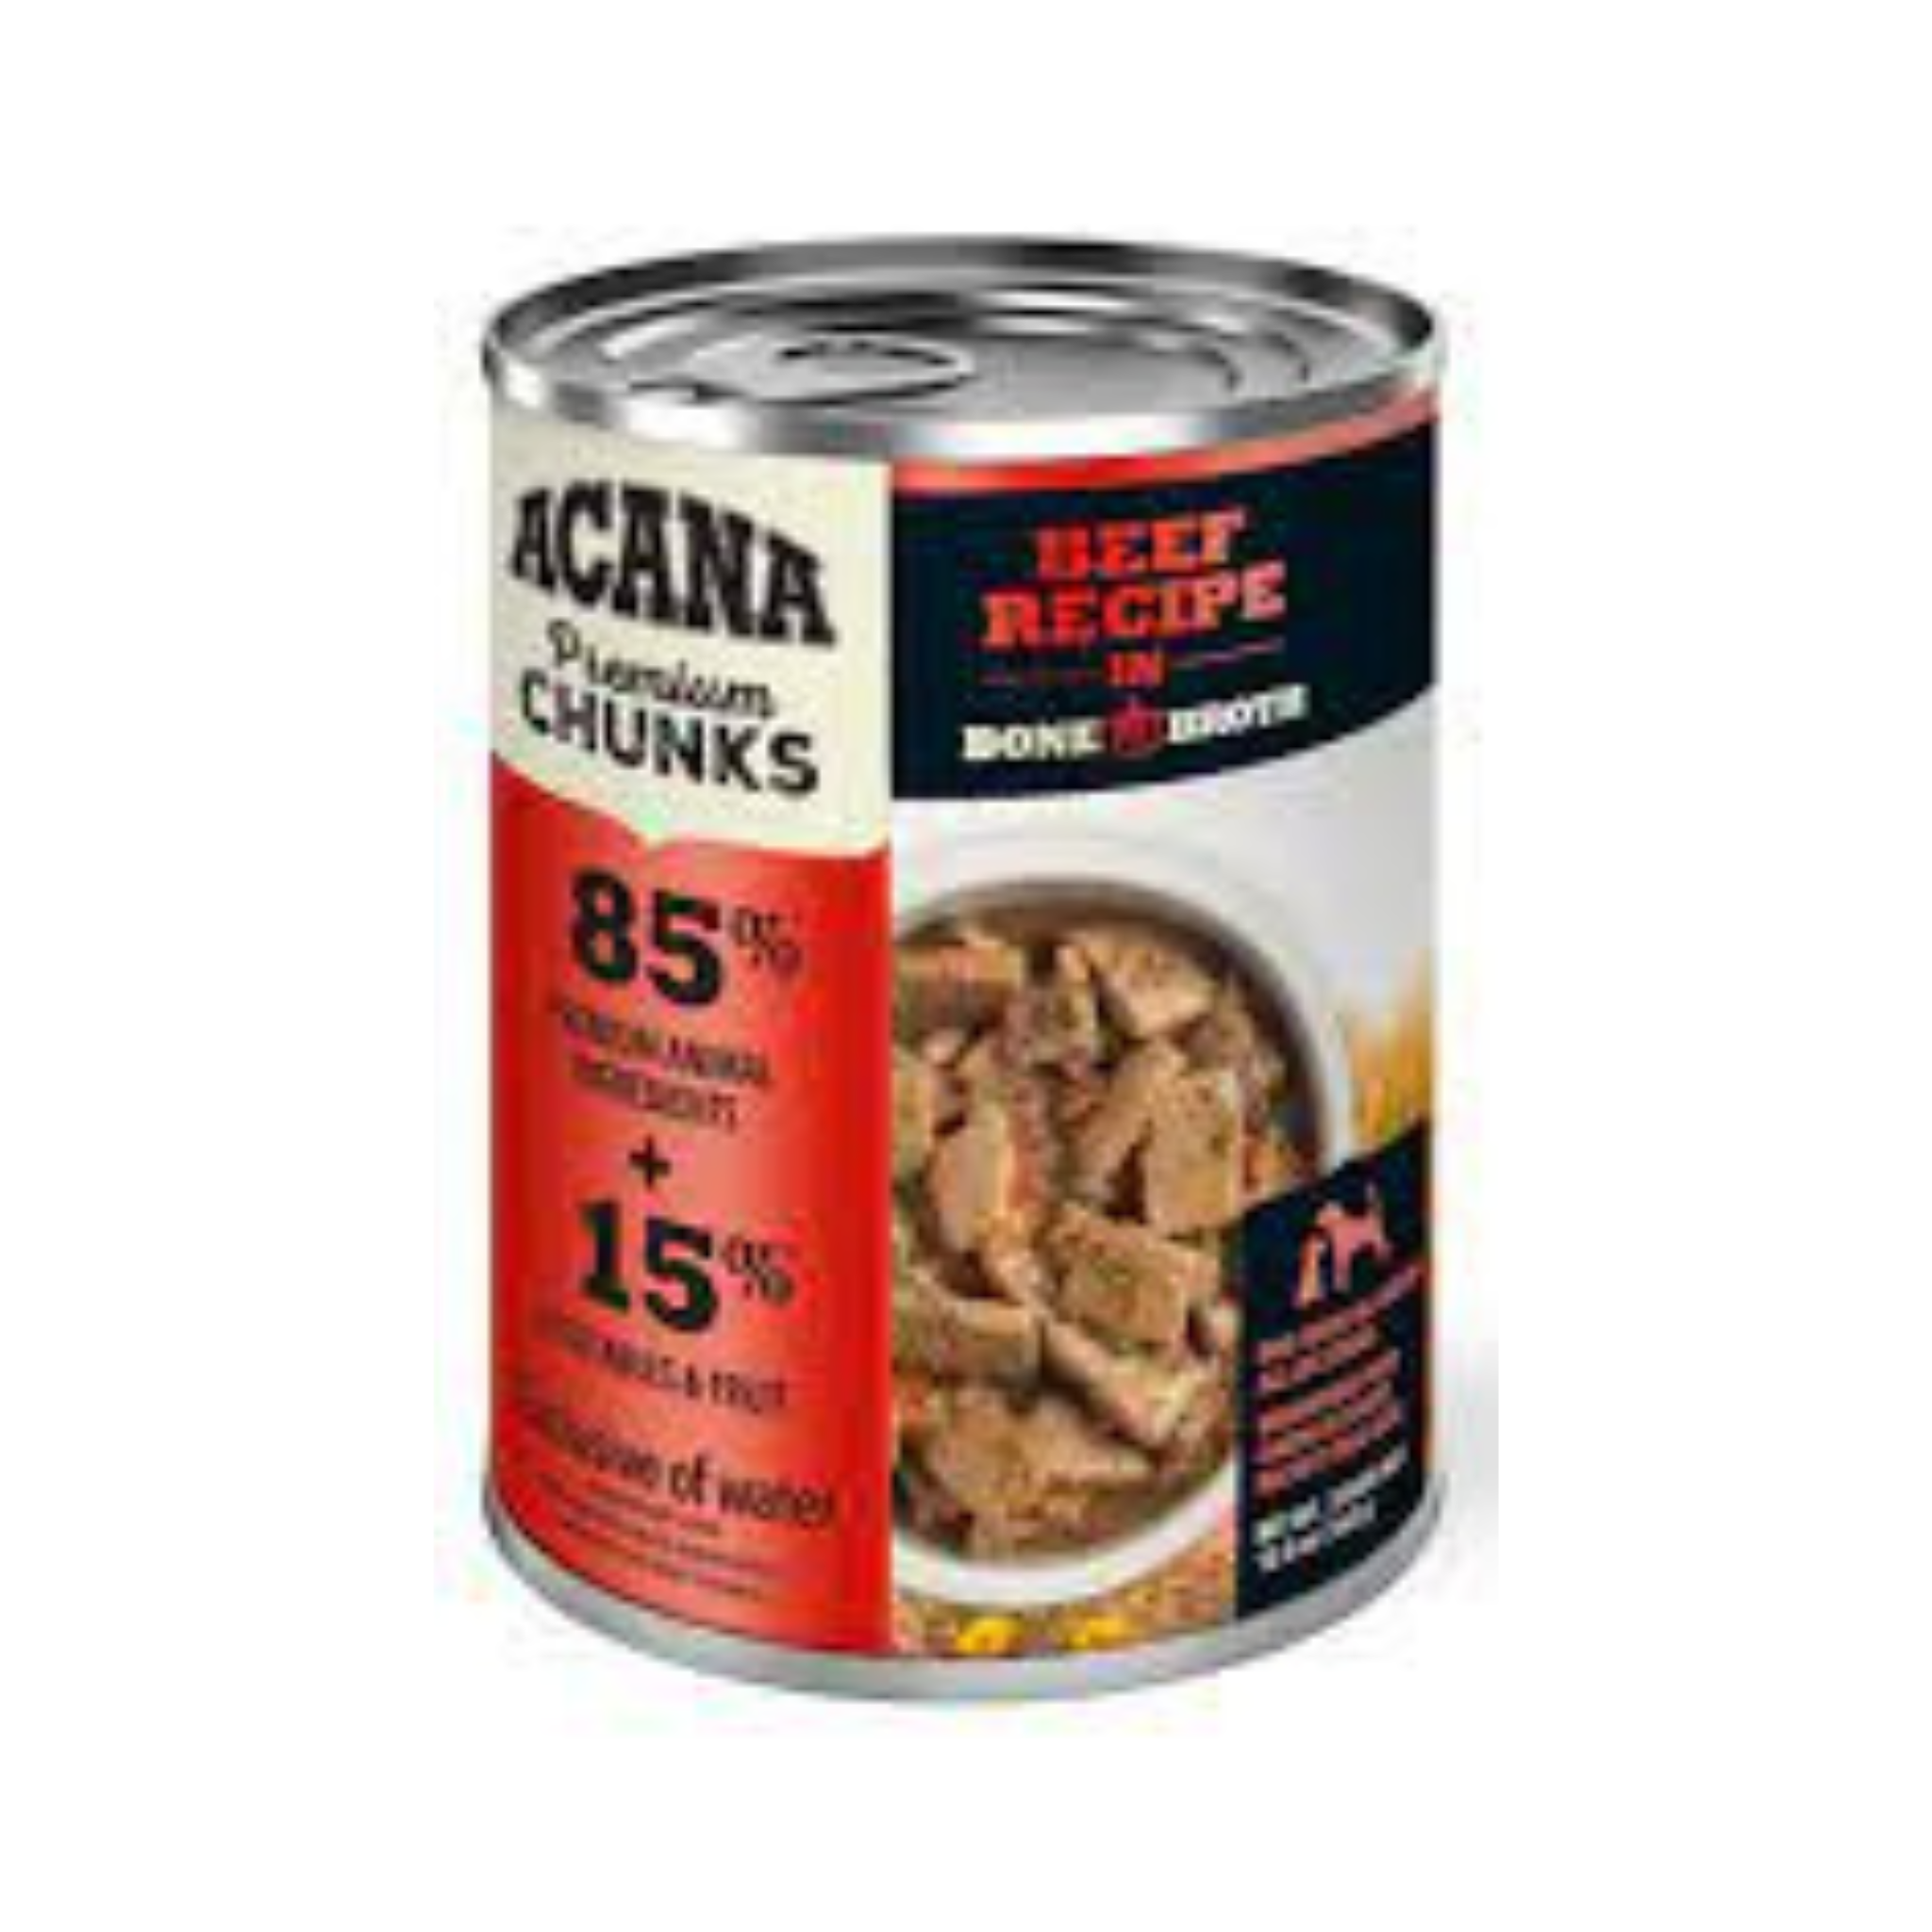 Acana Grain-Free Premium Chunks, Beef Recipe in Bone Broth